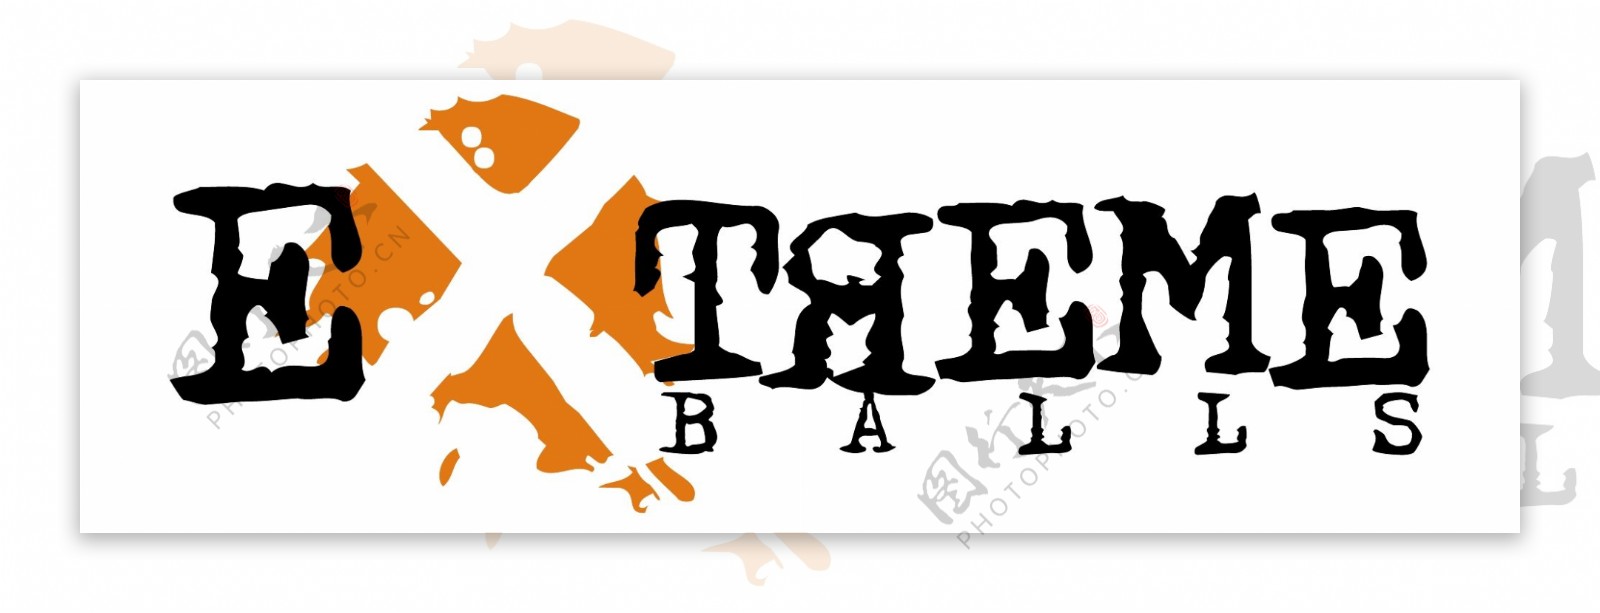 ExtremeBallsPaintballlogo设计欣赏ExtremeBallsPaintball体育比赛LOGO下载标志设计欣赏